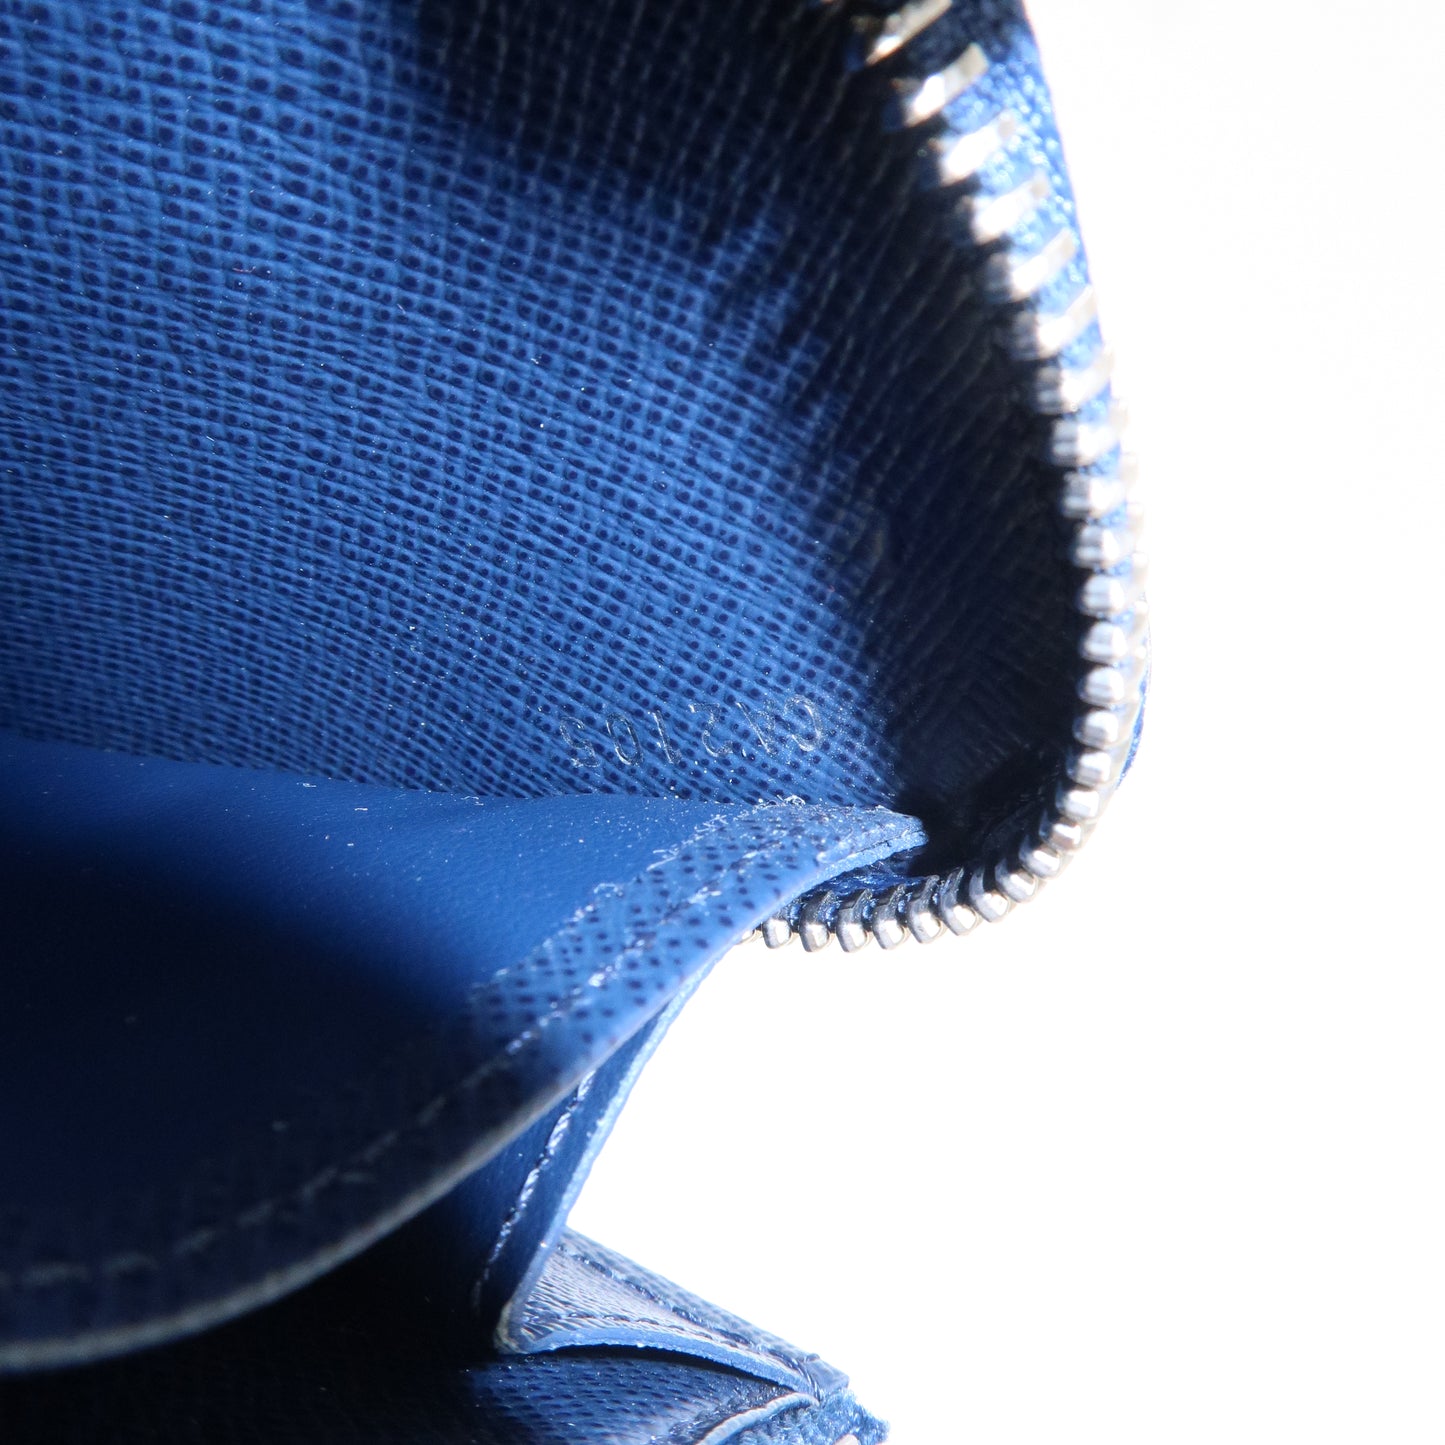 Louis Vuitton Epi Zippy Wallet Long Wallet Andigo Blue M60307